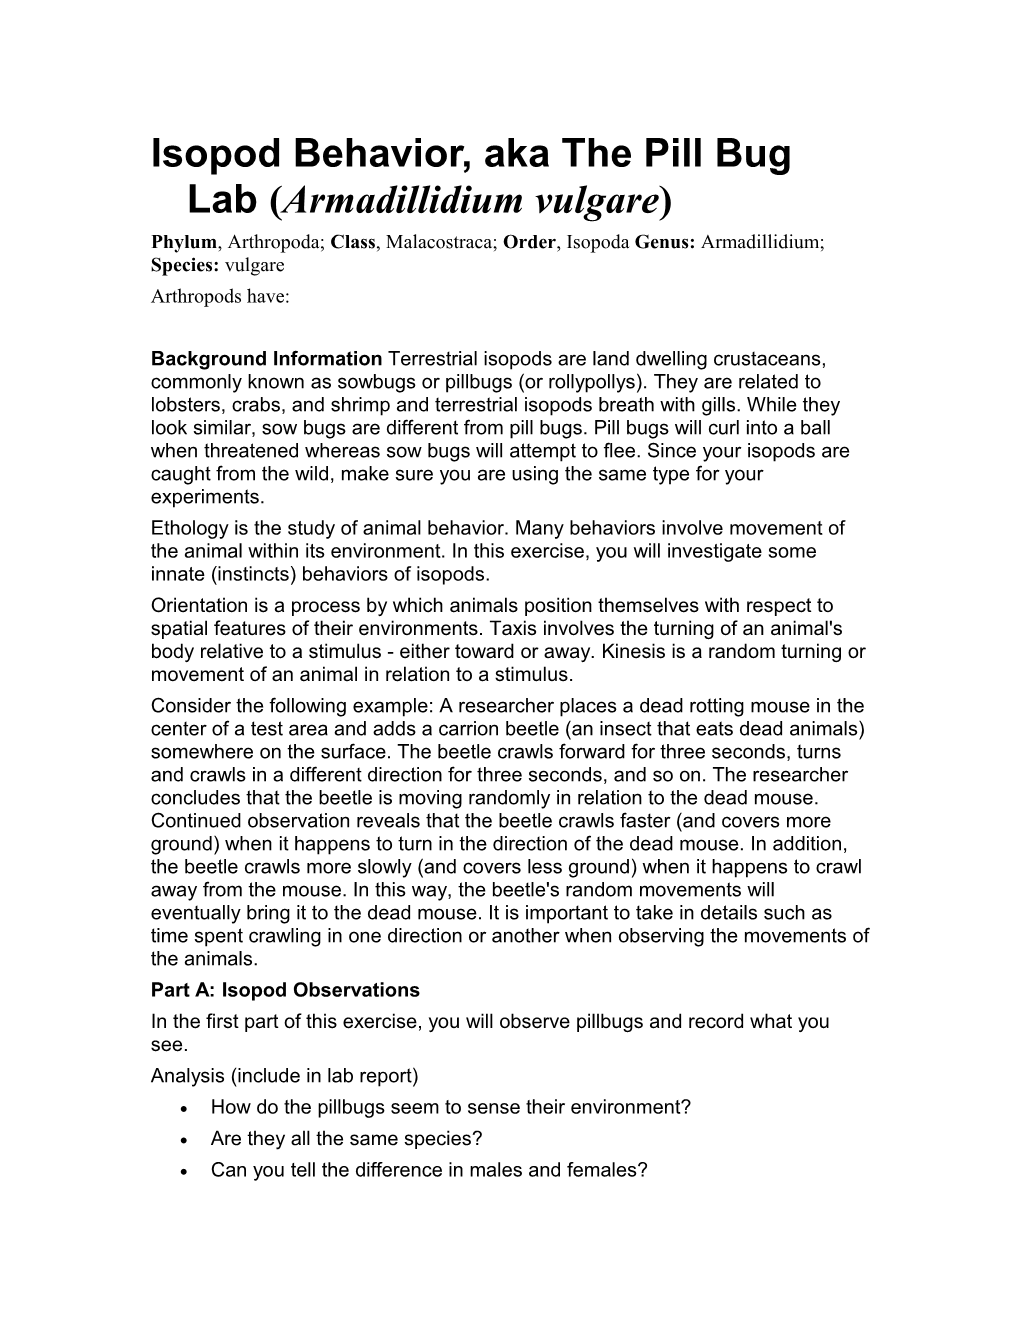 Isopod Behavior, Or the Pill Bug Lab